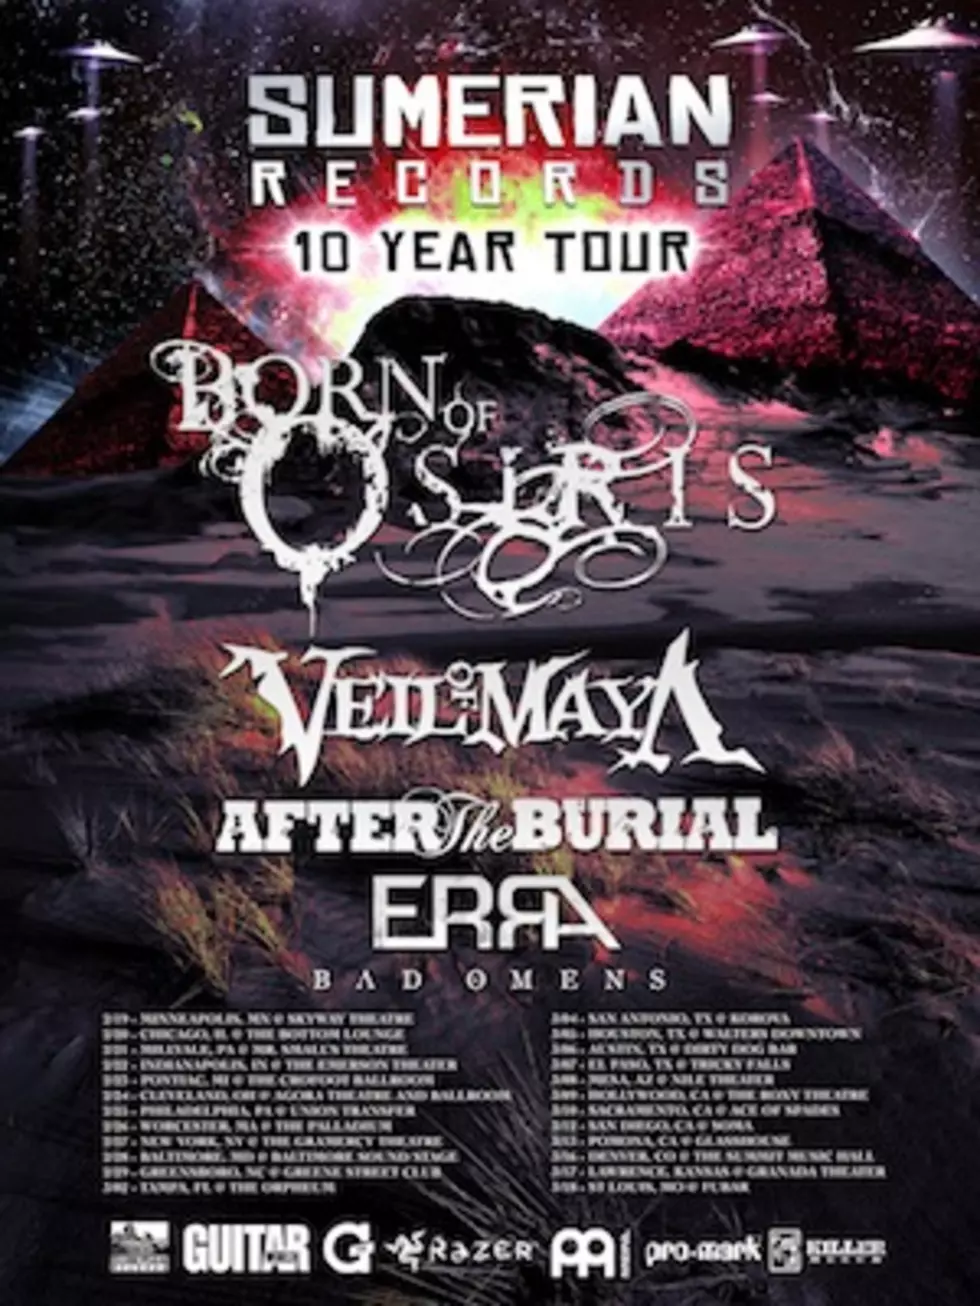 Born of Osiris, Veil of Maya Lead Sumerian Records 10 Year Anniversary  2016 U.S. Tour